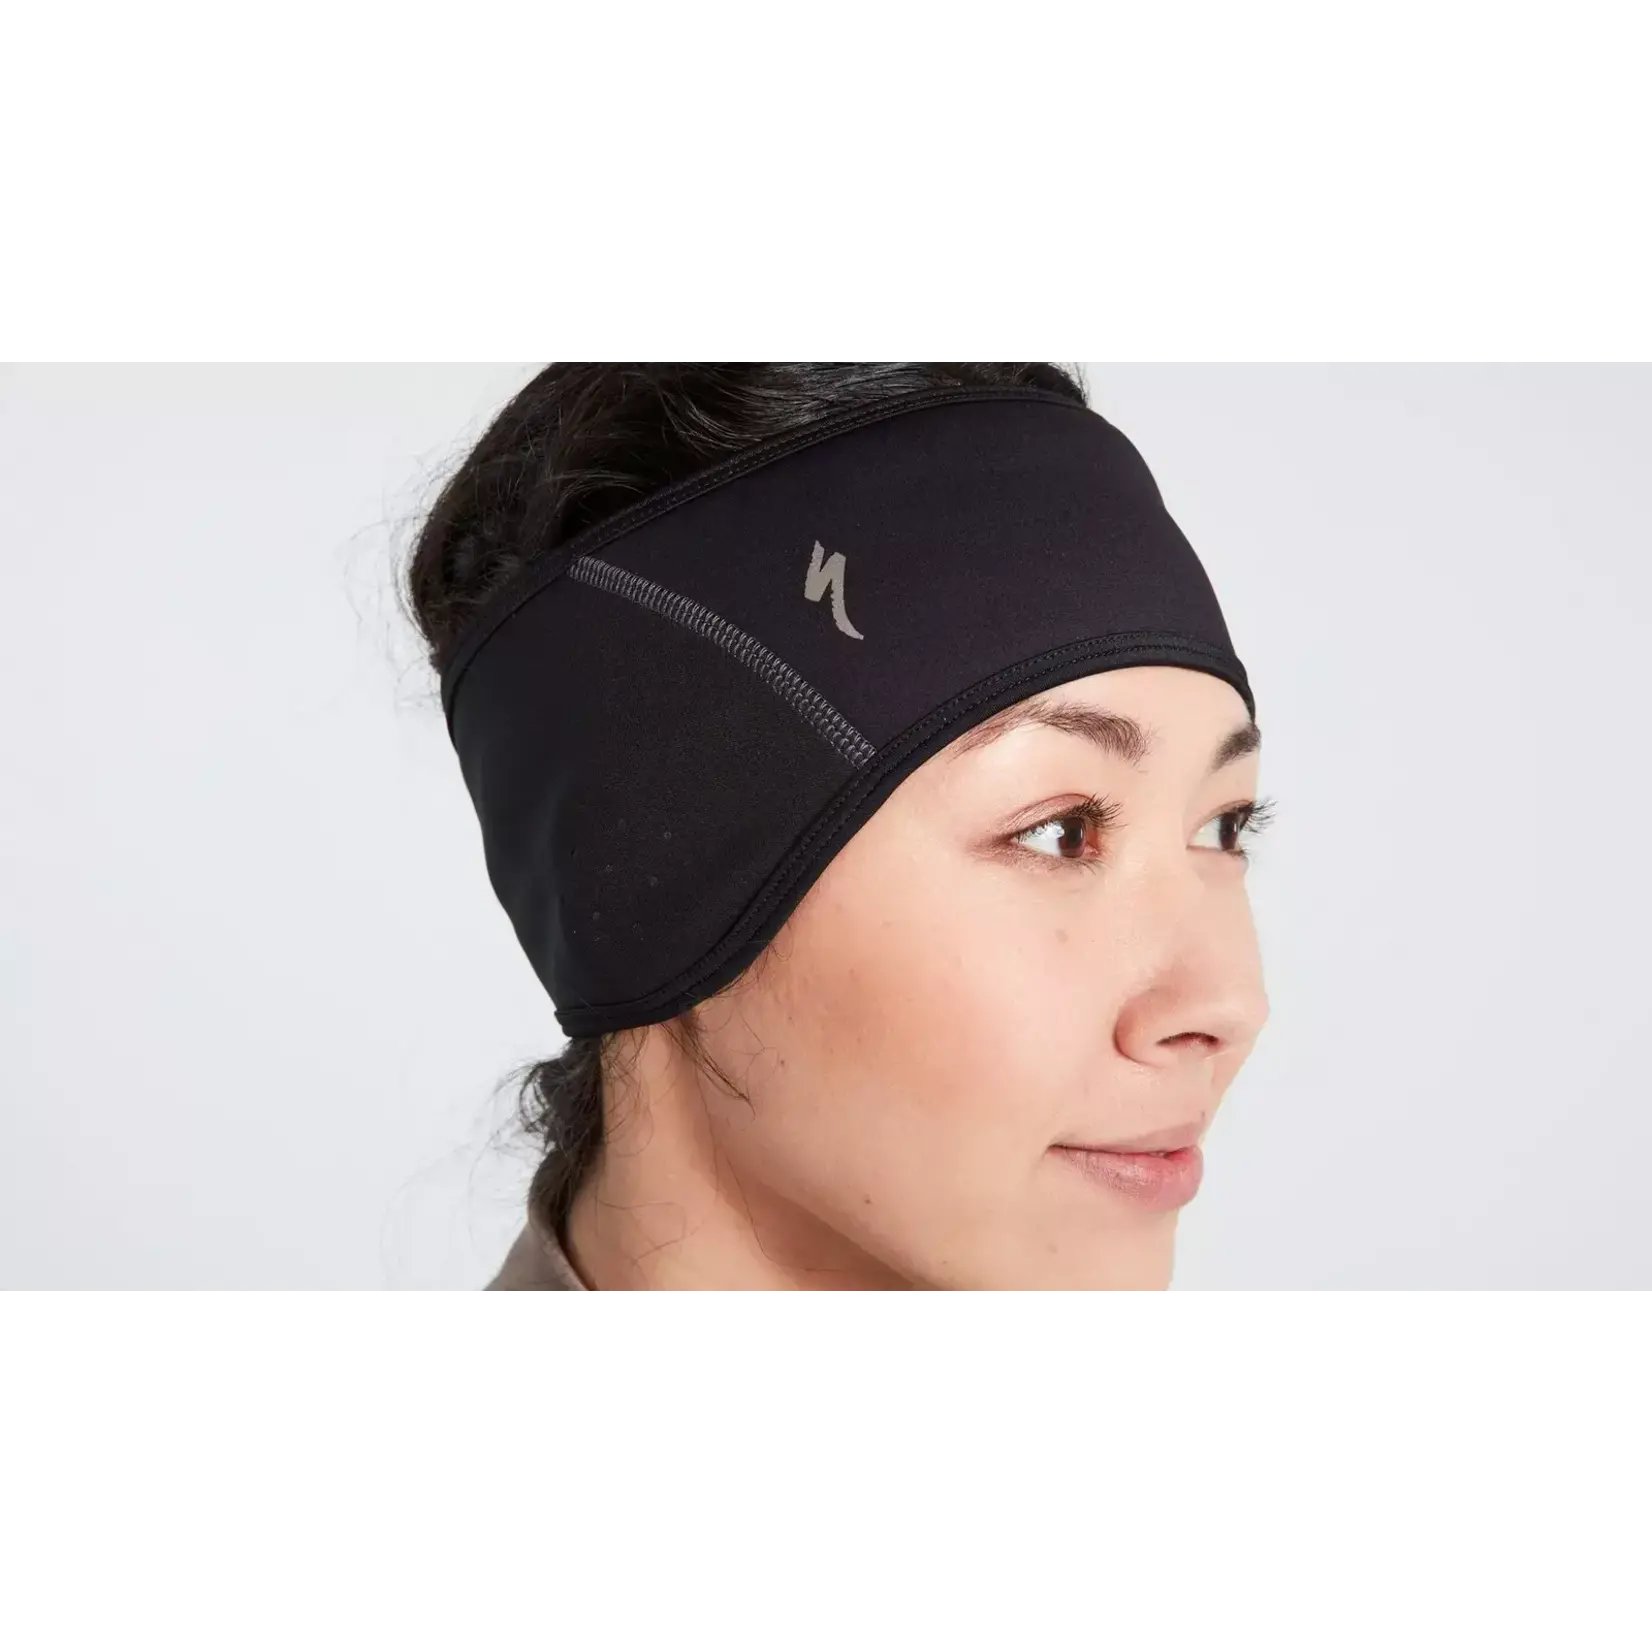 Specialized Specialized Thermal Headband - One Size - Black